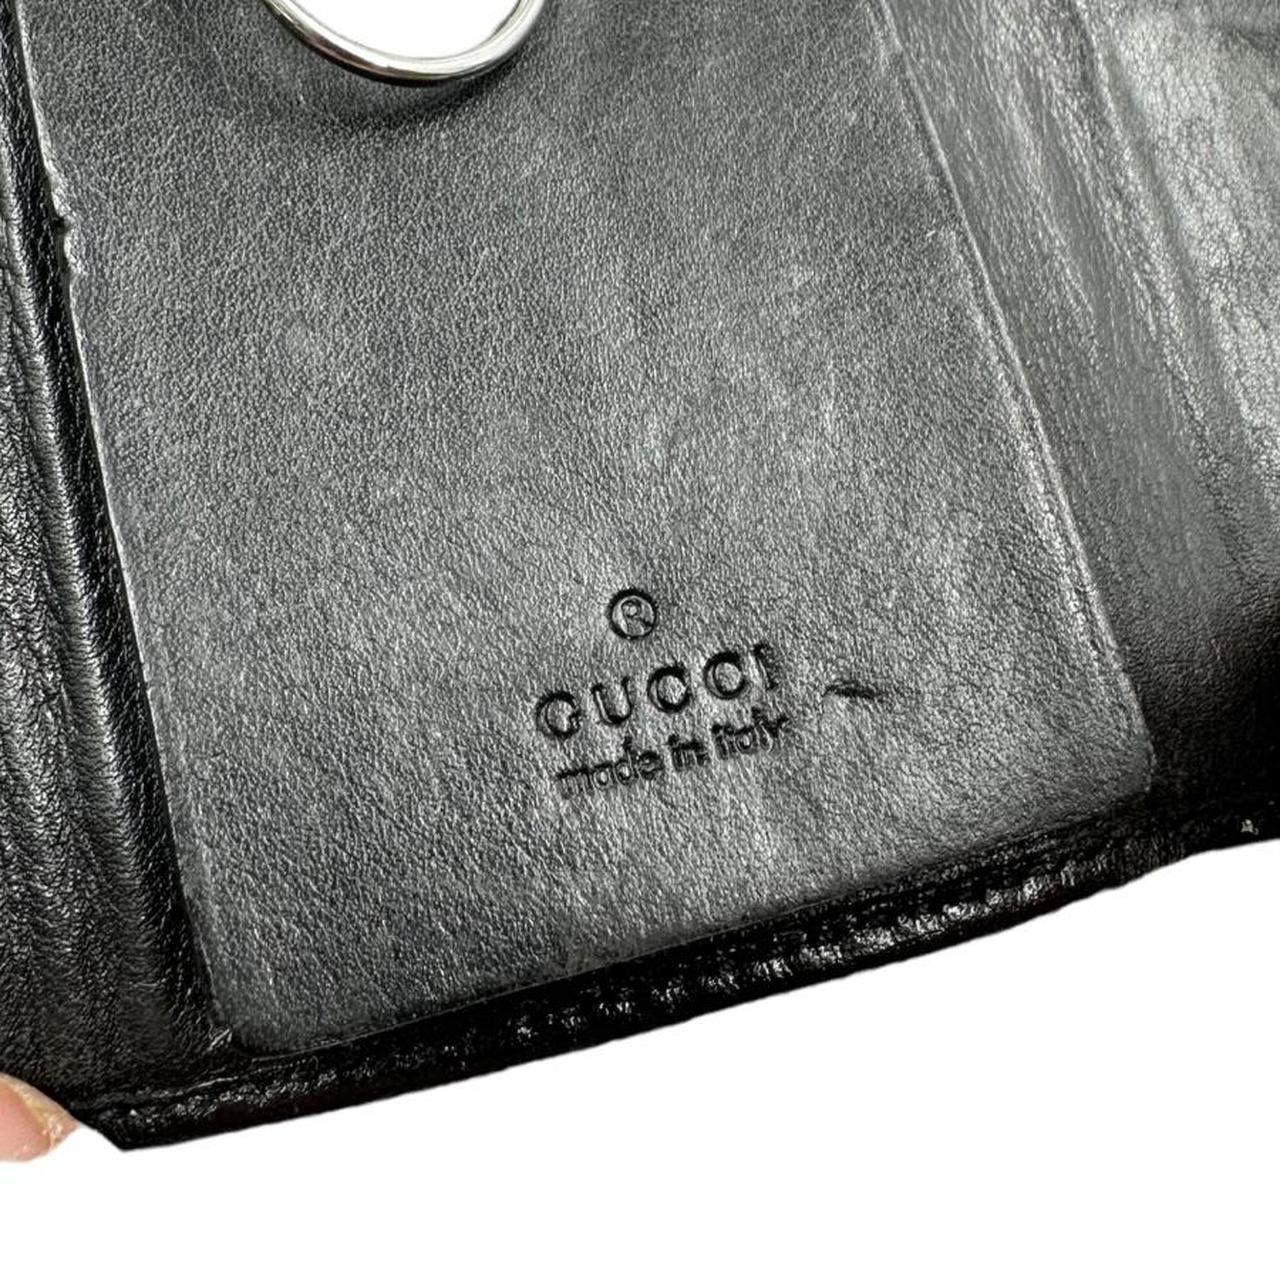 Vintage Gucci Key Holder - Known Source